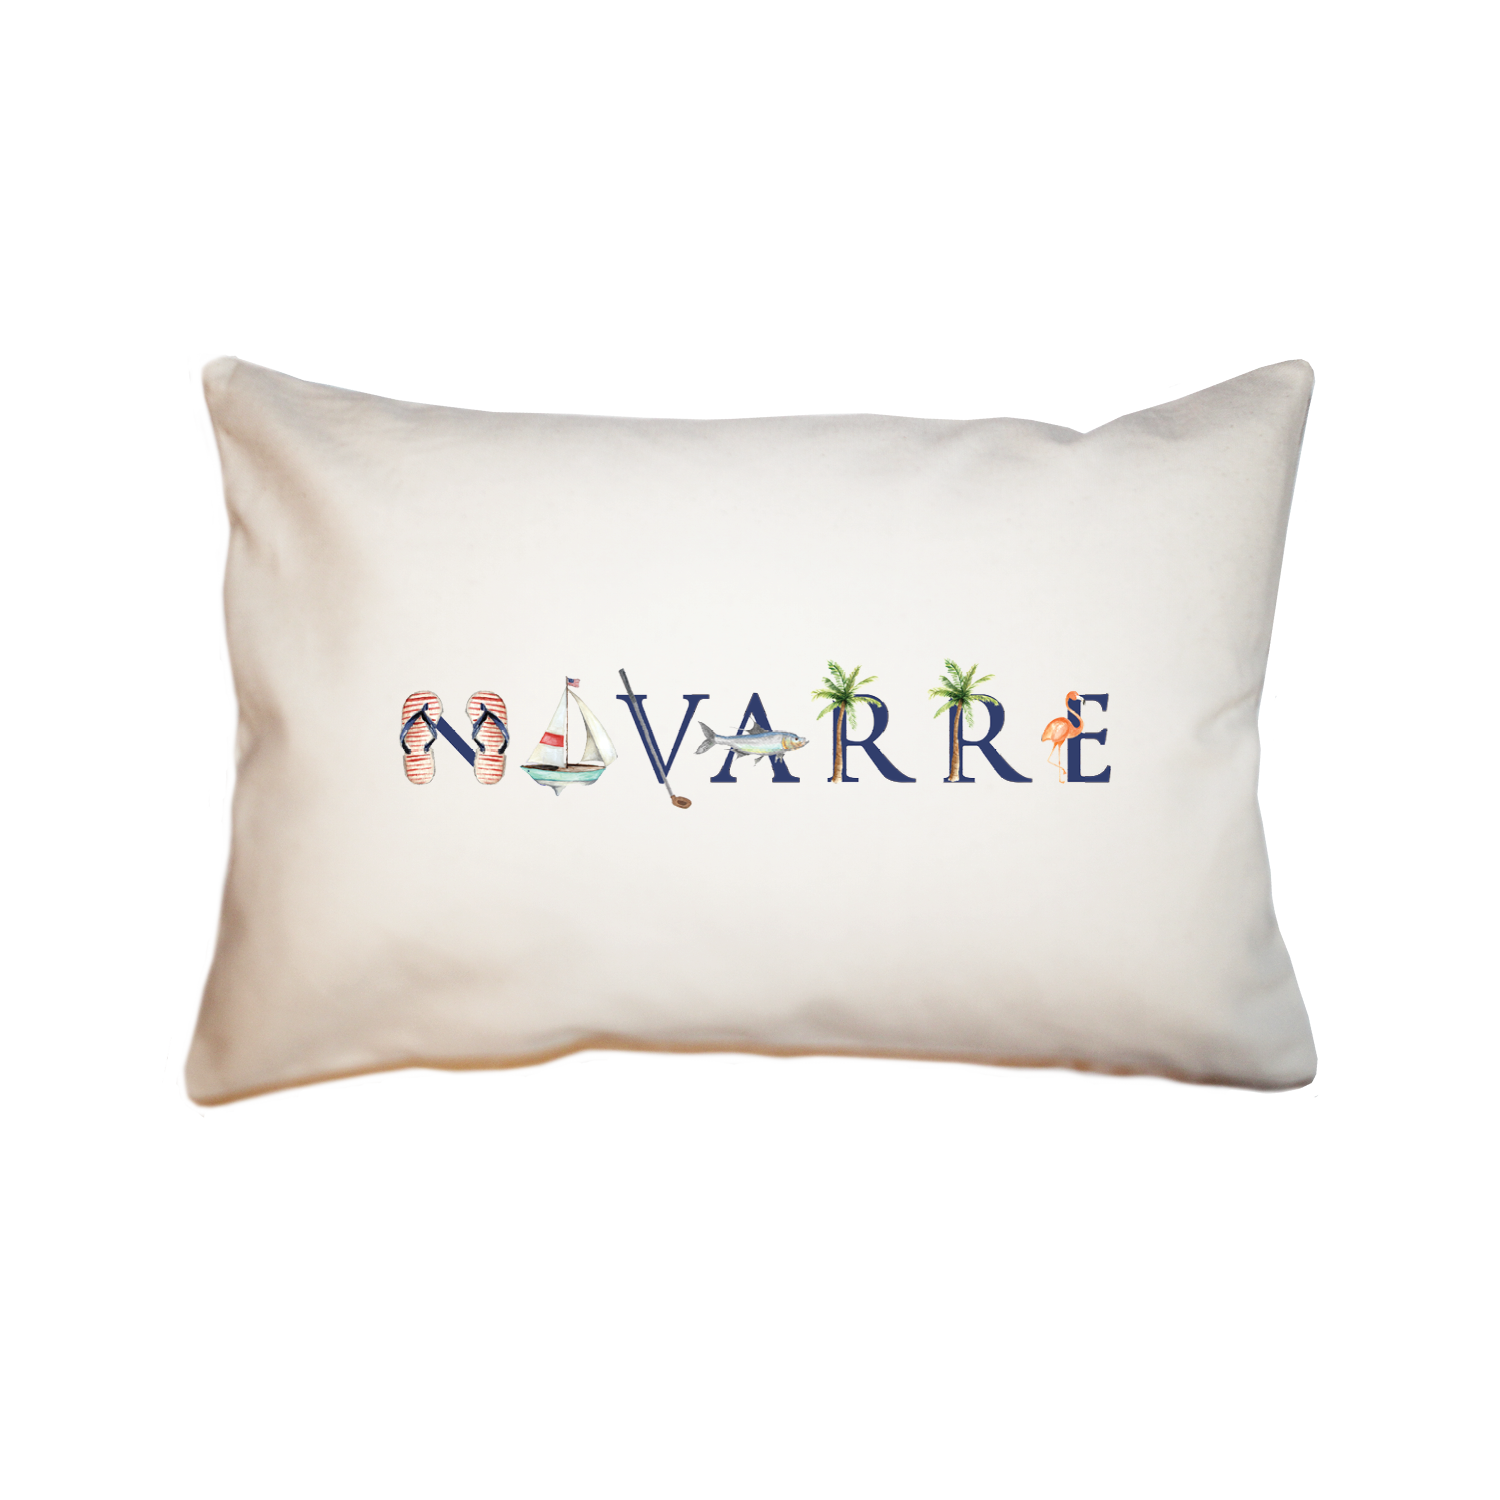 Navarre large rectangle pillow